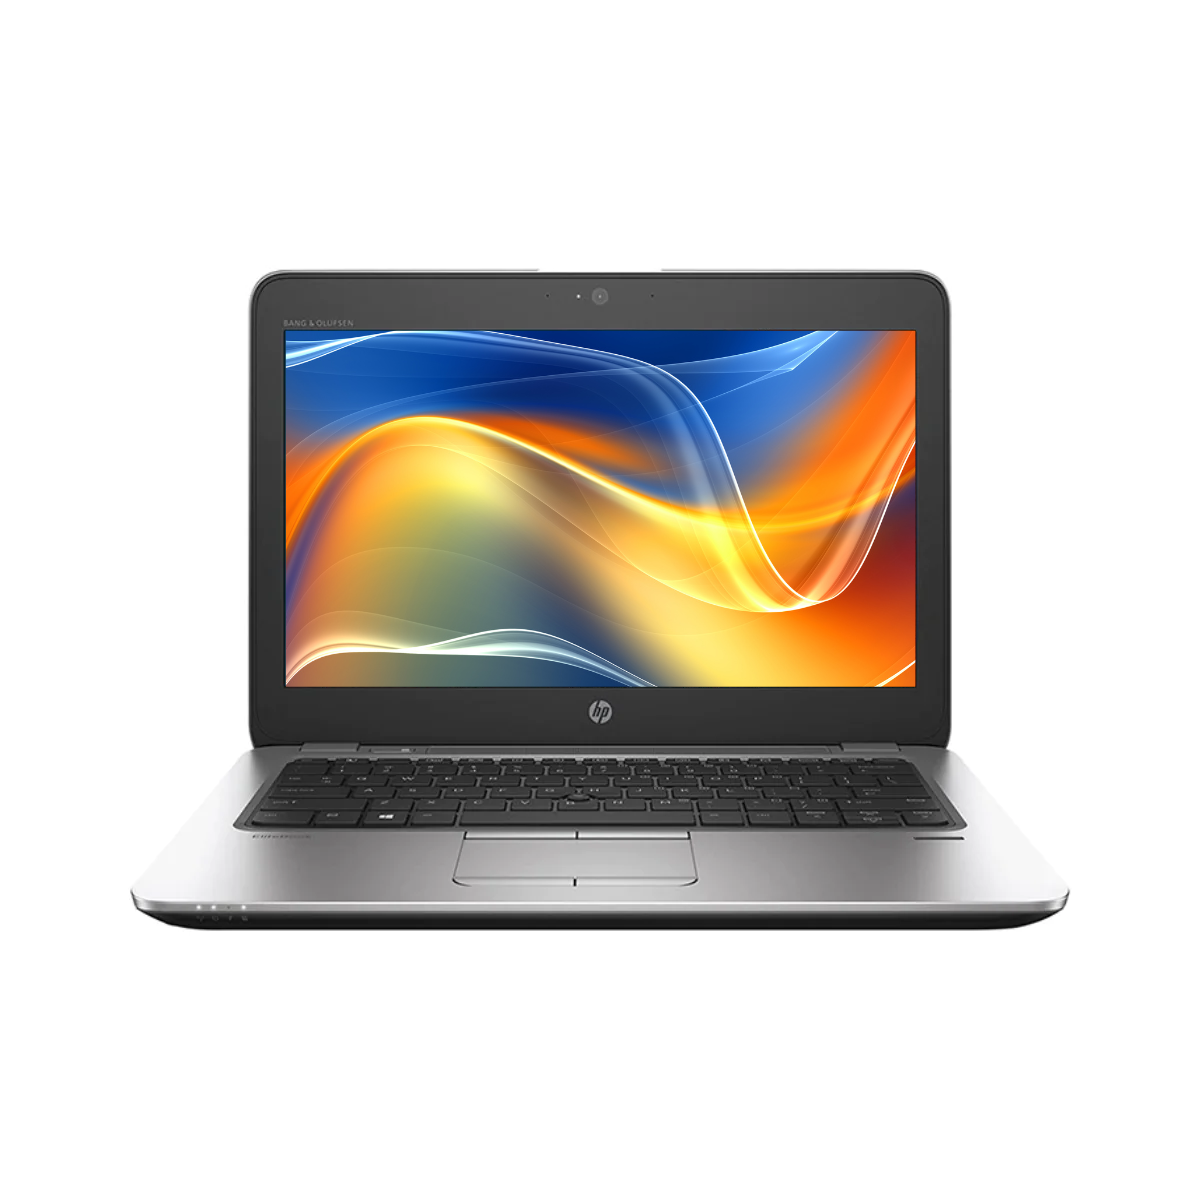 HP EliteBook 820 G3 i5 (6th Gen) 8GB RAM 180GB SSD 12.5